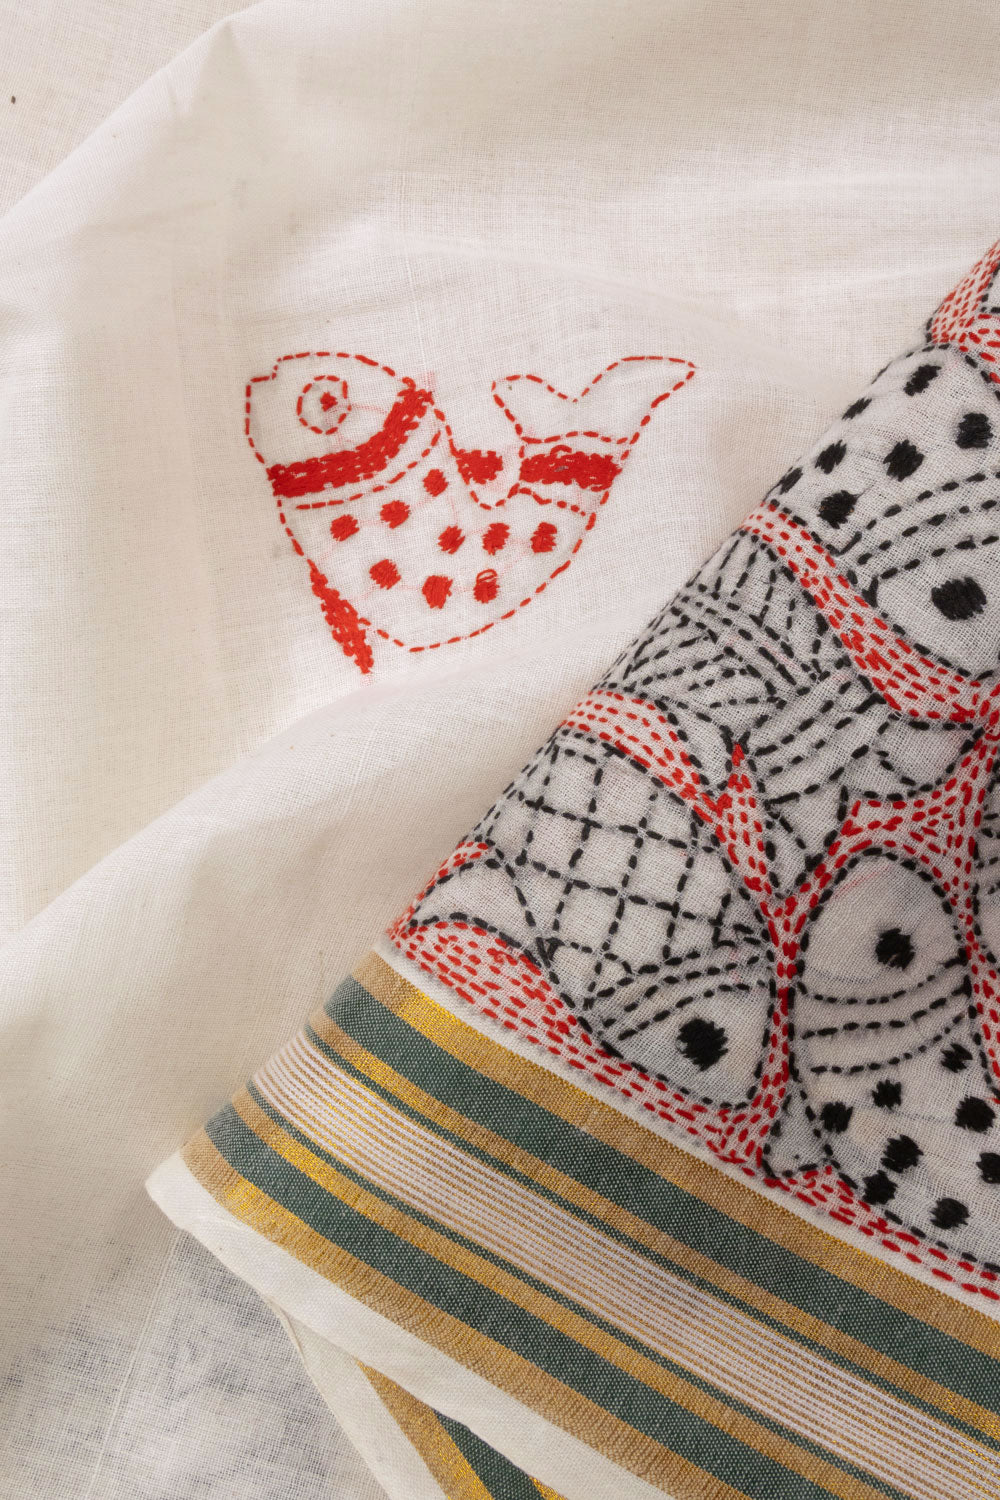 Off White Kantha Embroidered Cotton Saree - Avishya